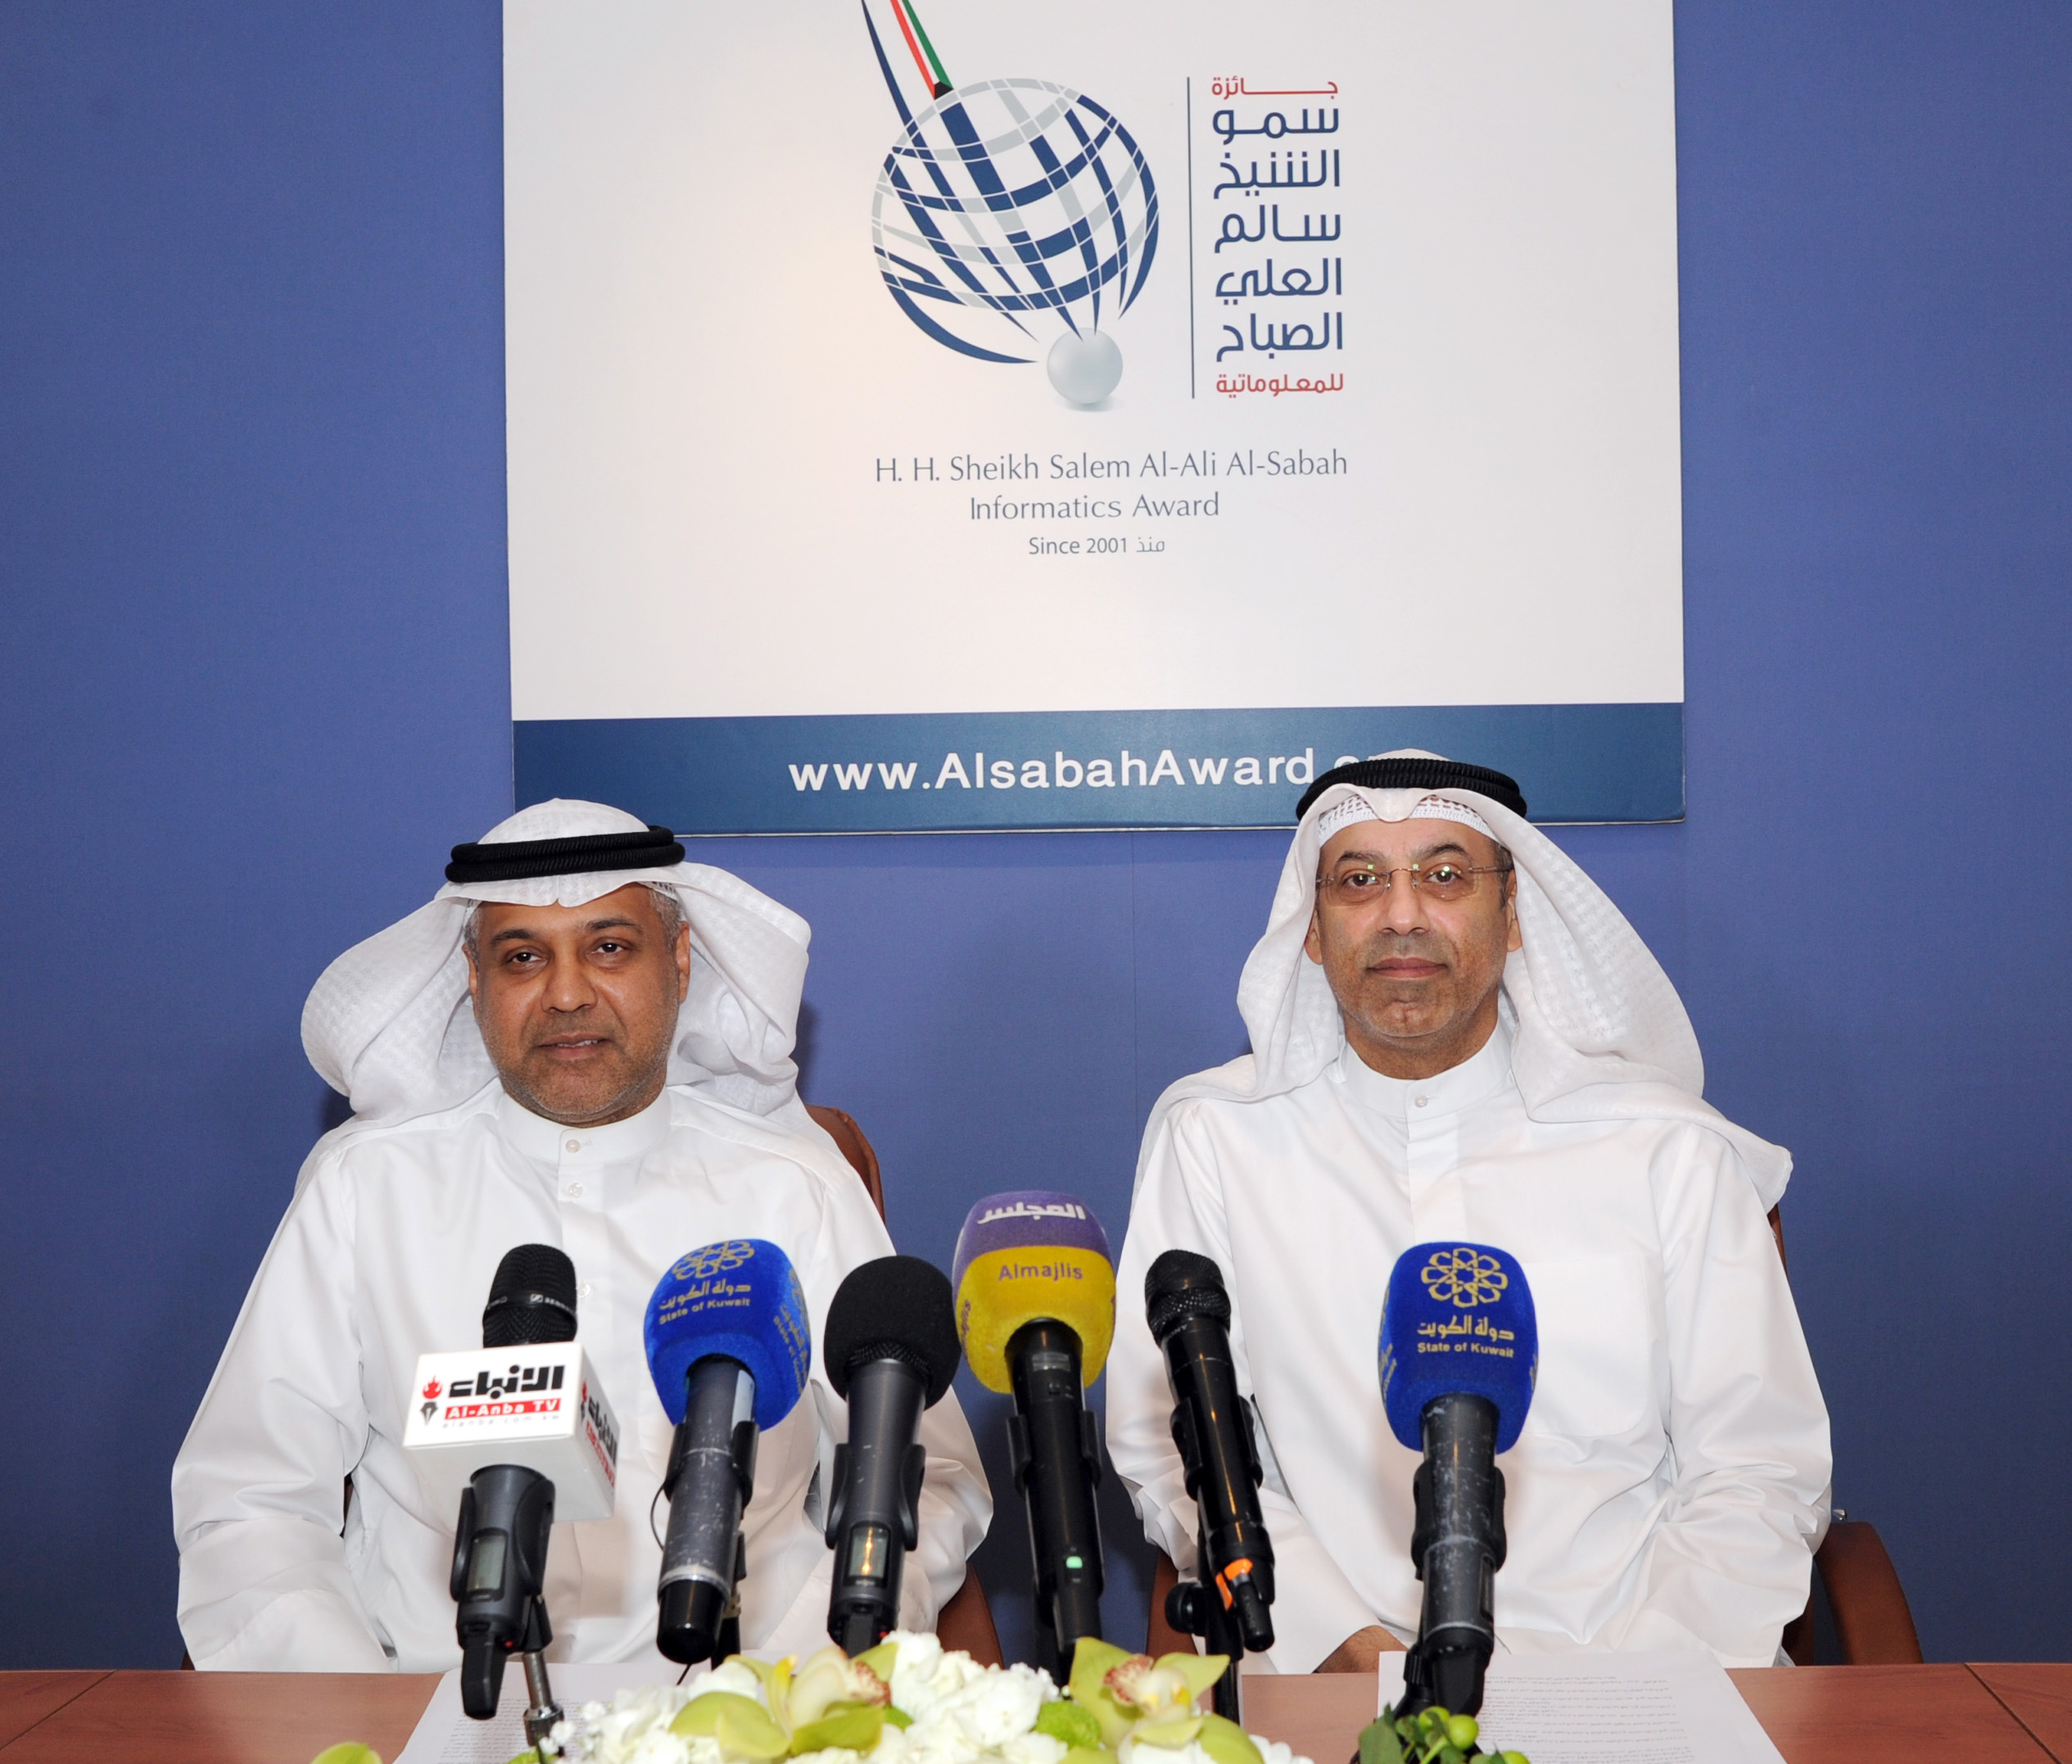 His Highness Sheikh Salem Al-Ali Al-Sabah Informatics Award press conference